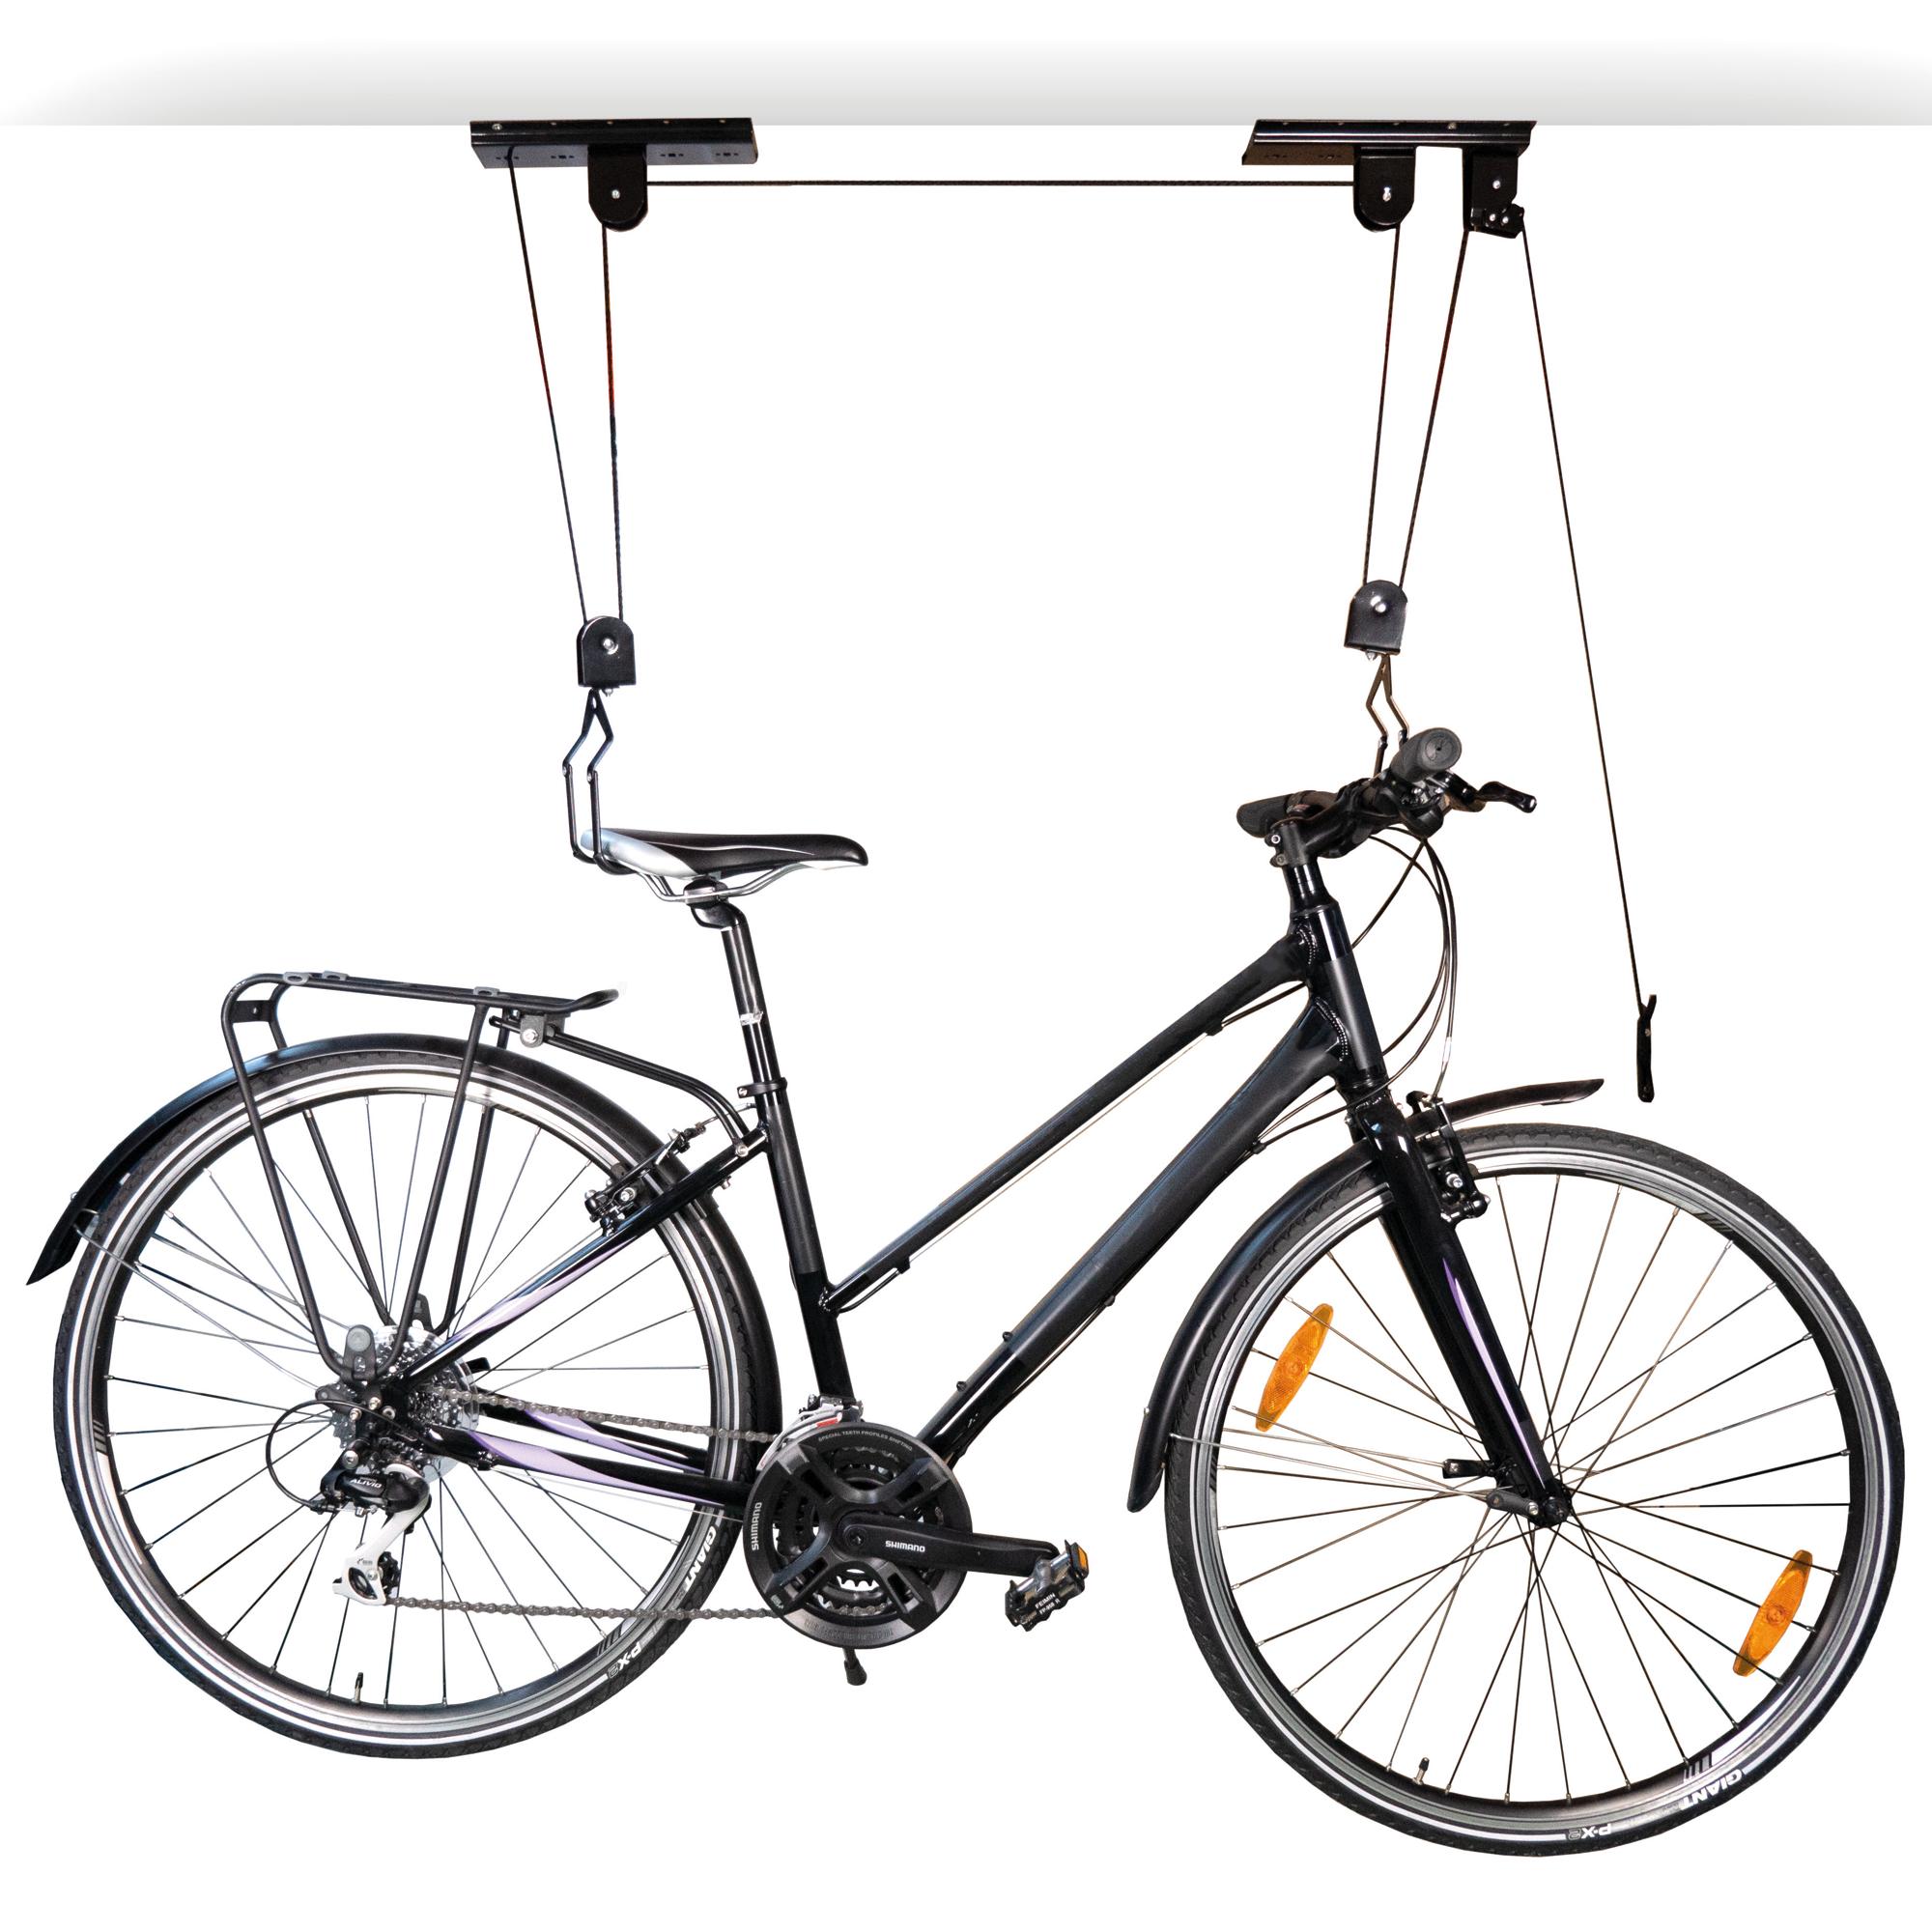 BIKE ORIGINAL Bike Ceiling Rack